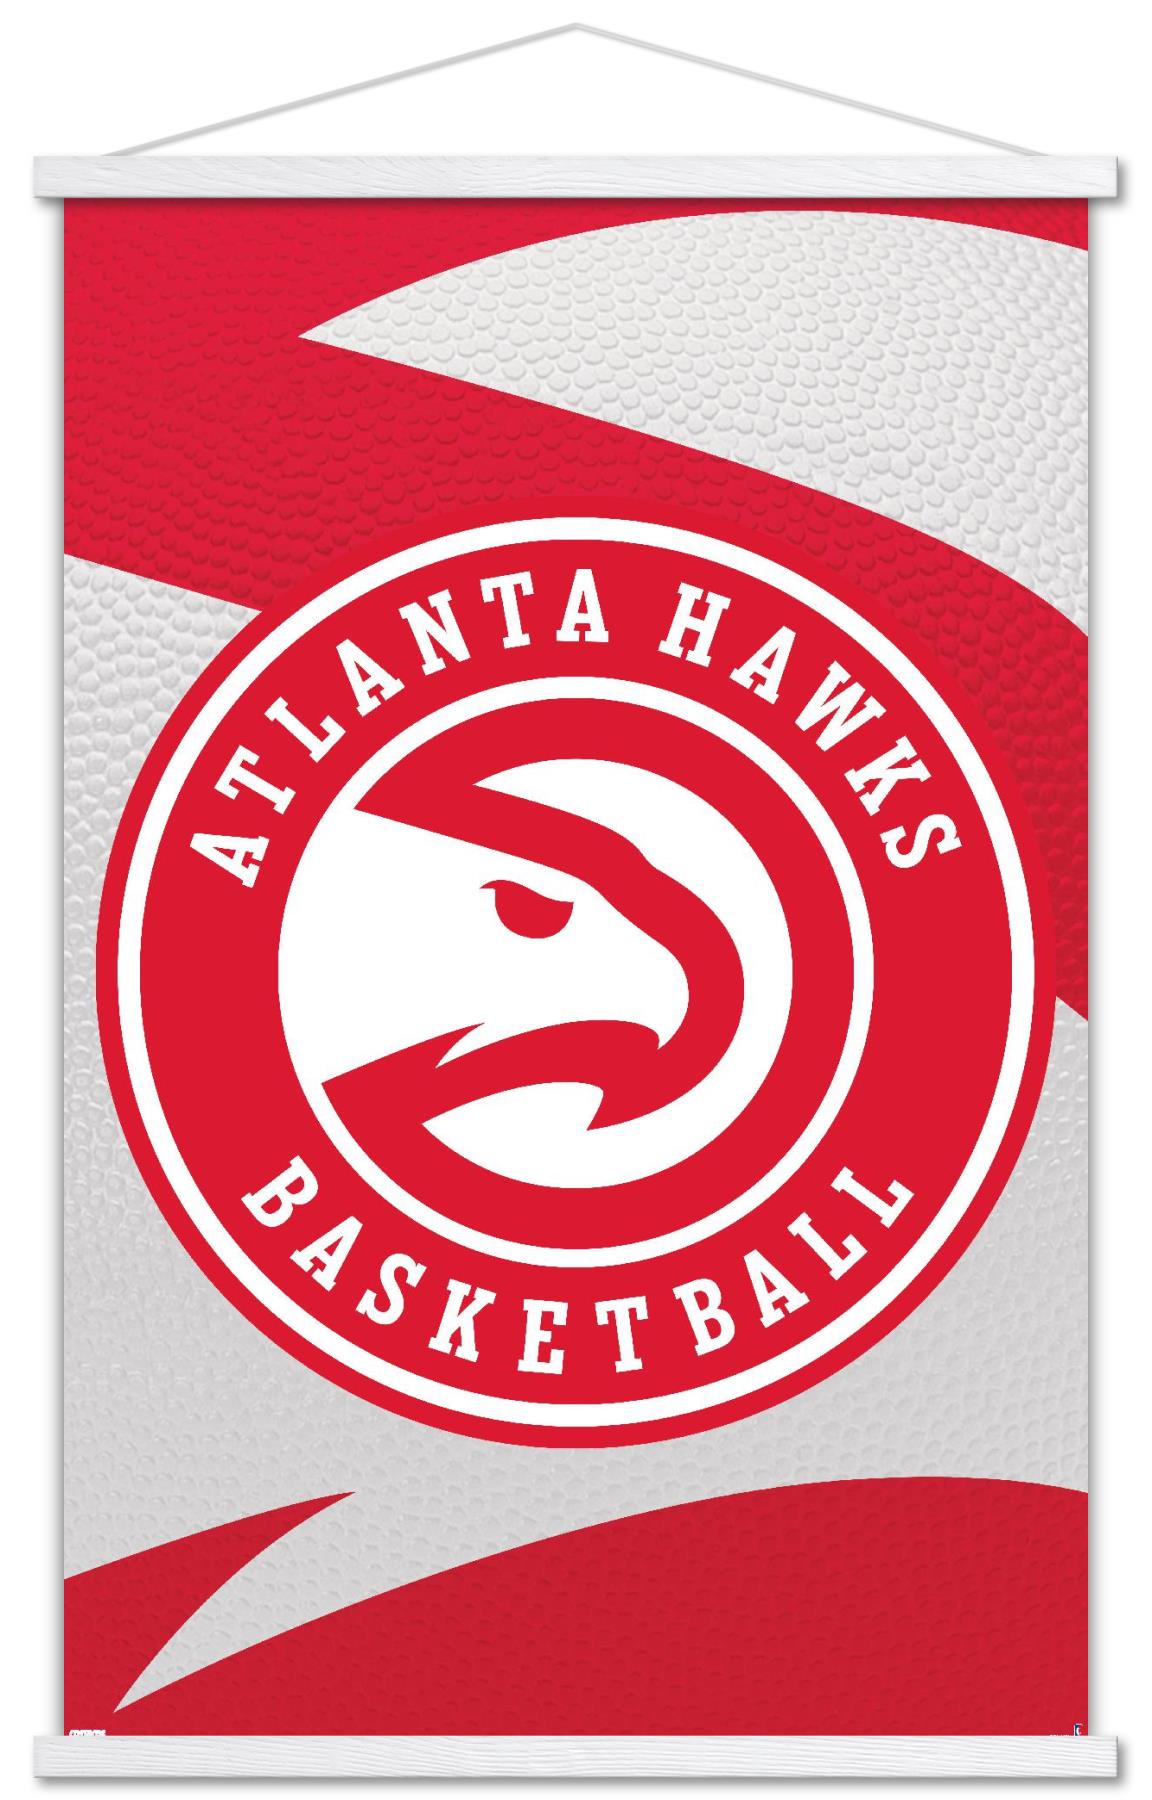 Atlanta Hawks basketball